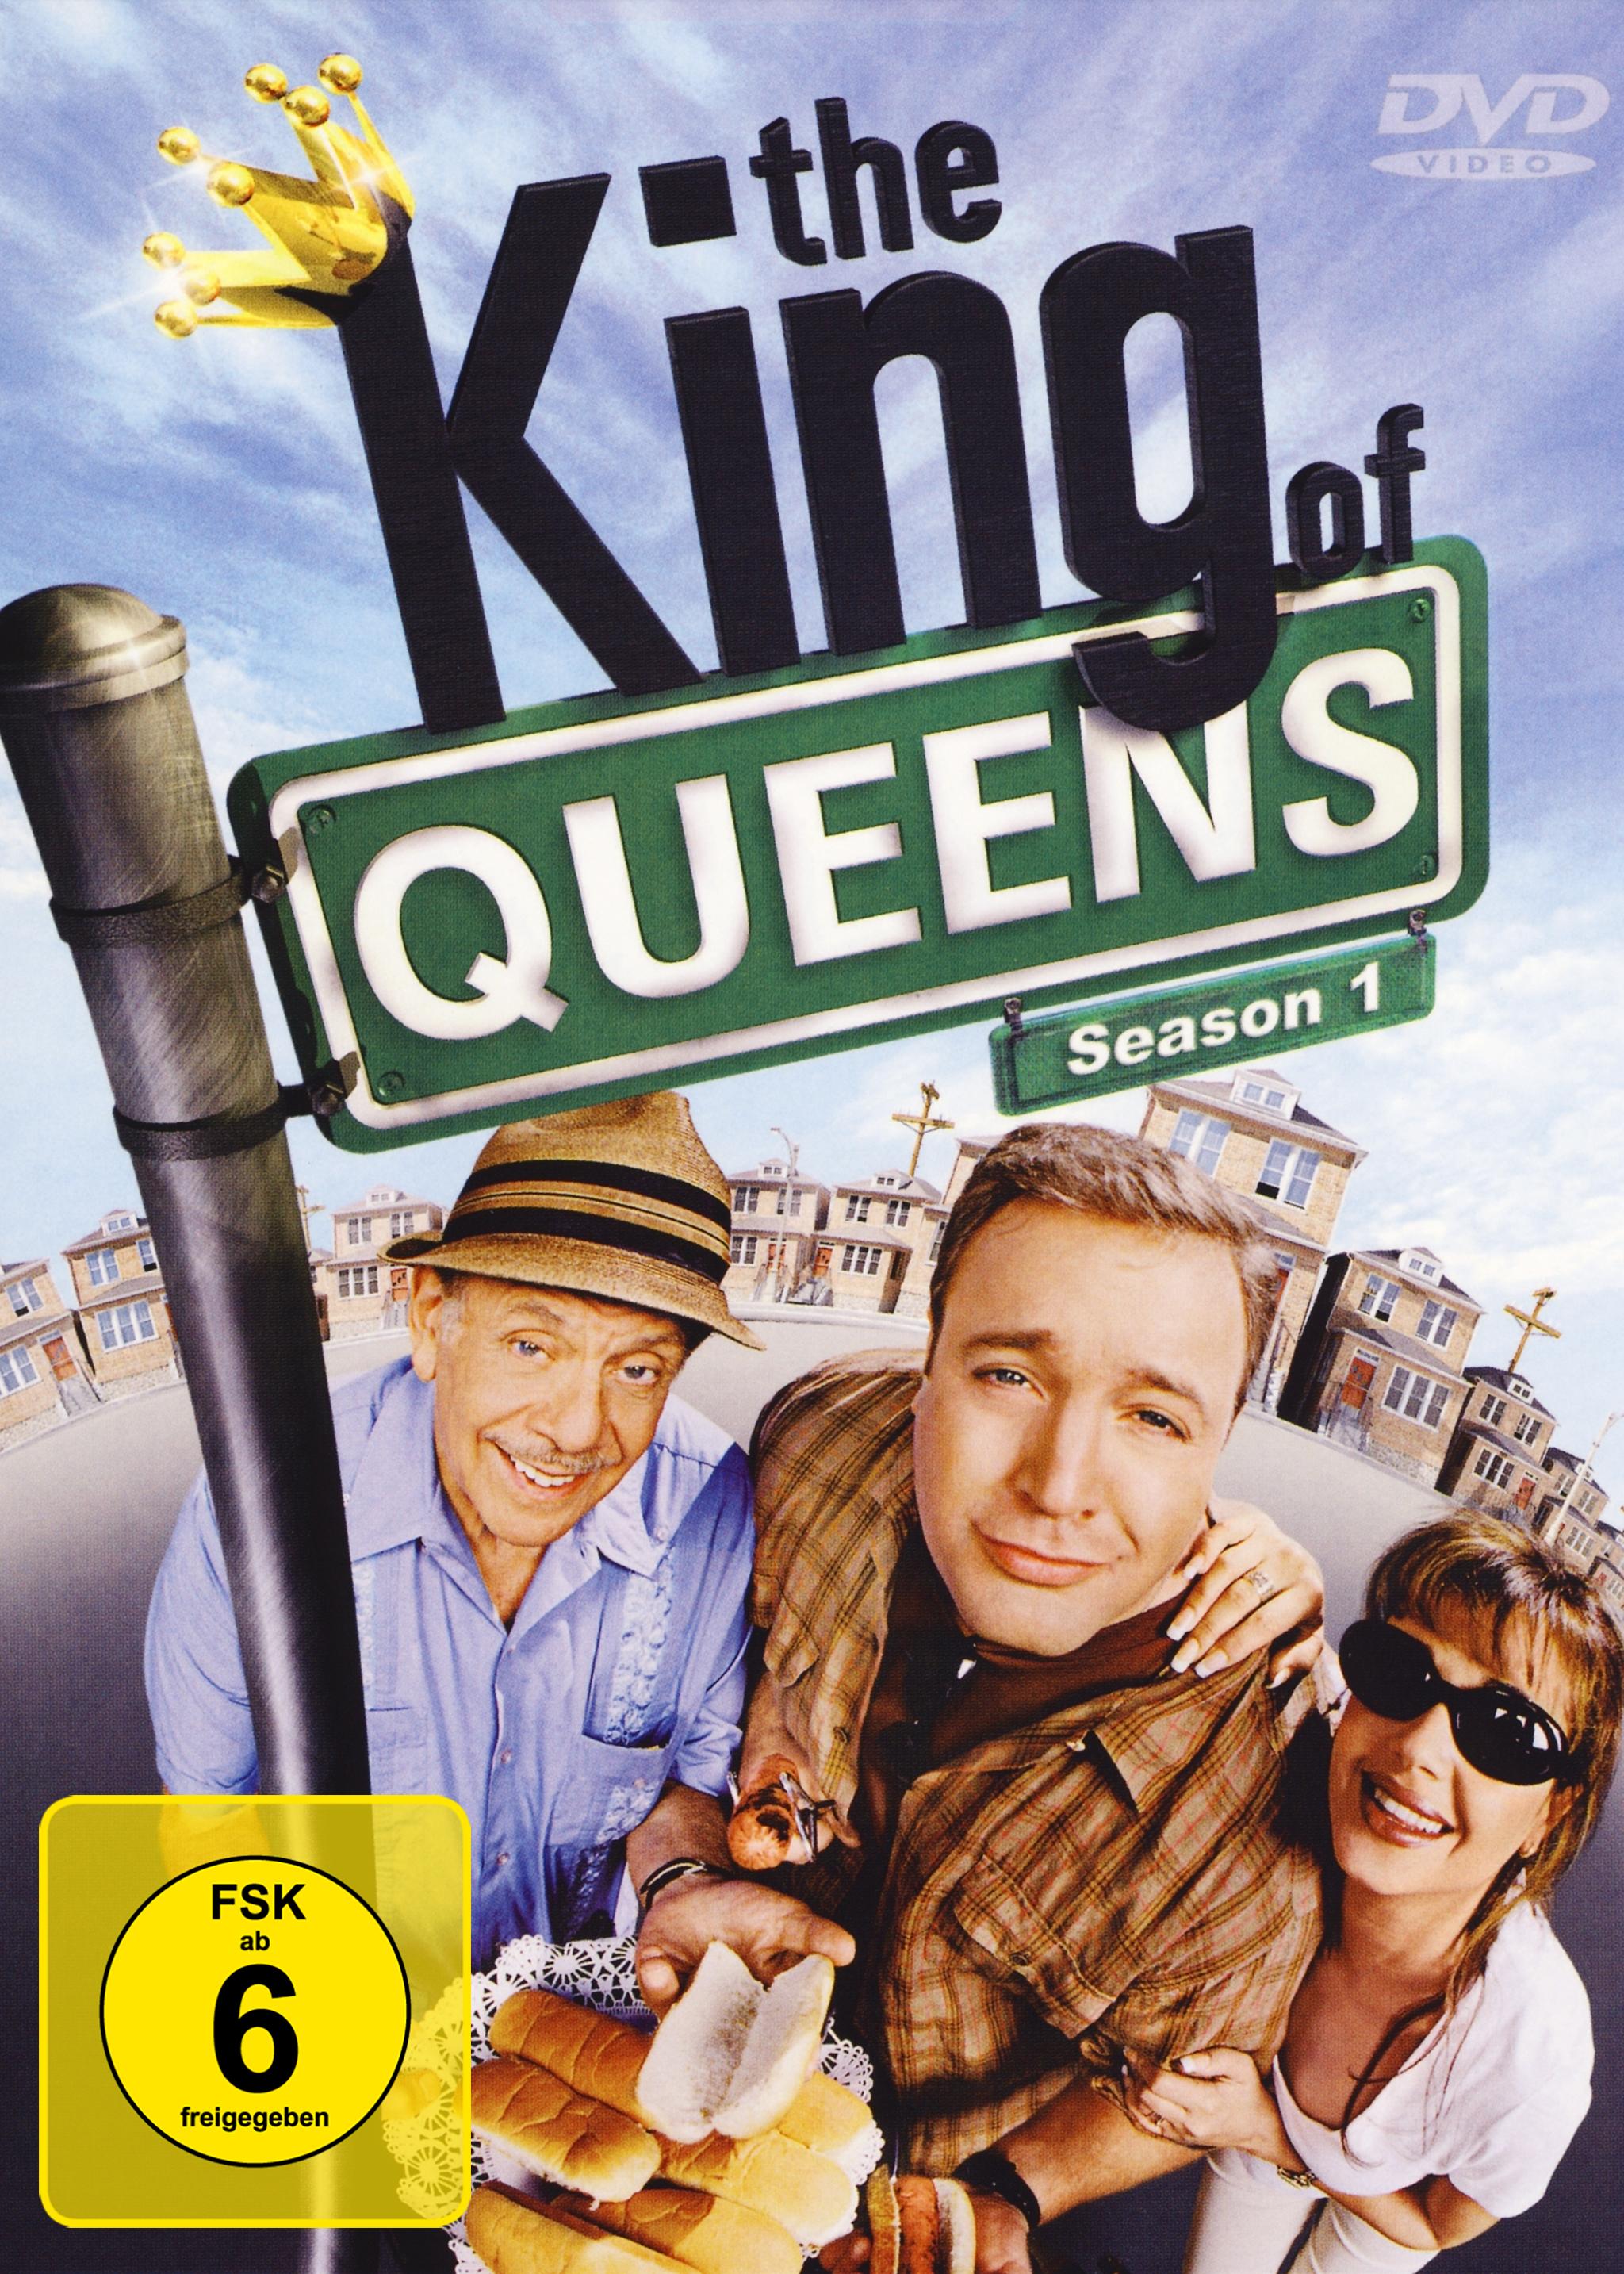 The King of Queens - Die komplette Serie - King Box [18 BRs]' von